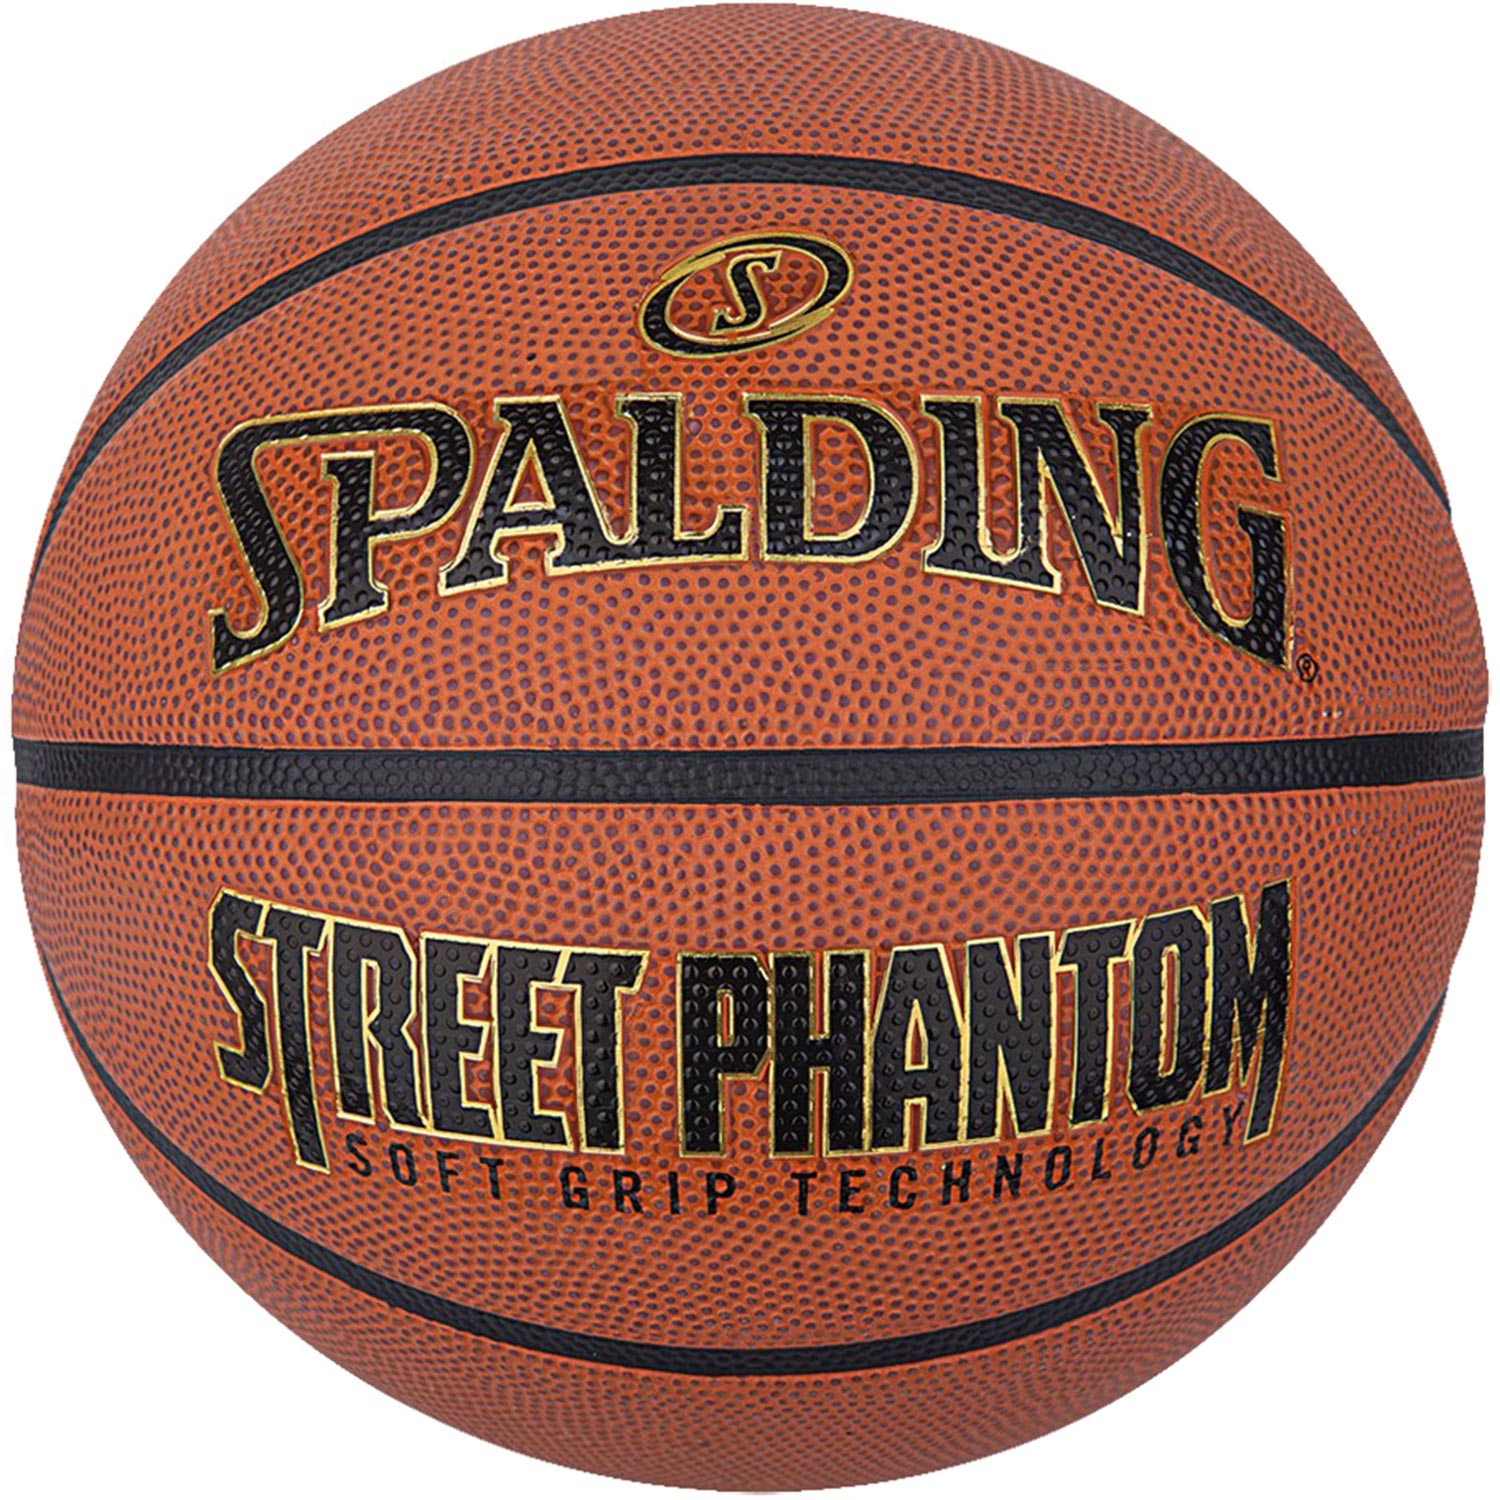 Spalding Street Phantom basketball outdoor size 7